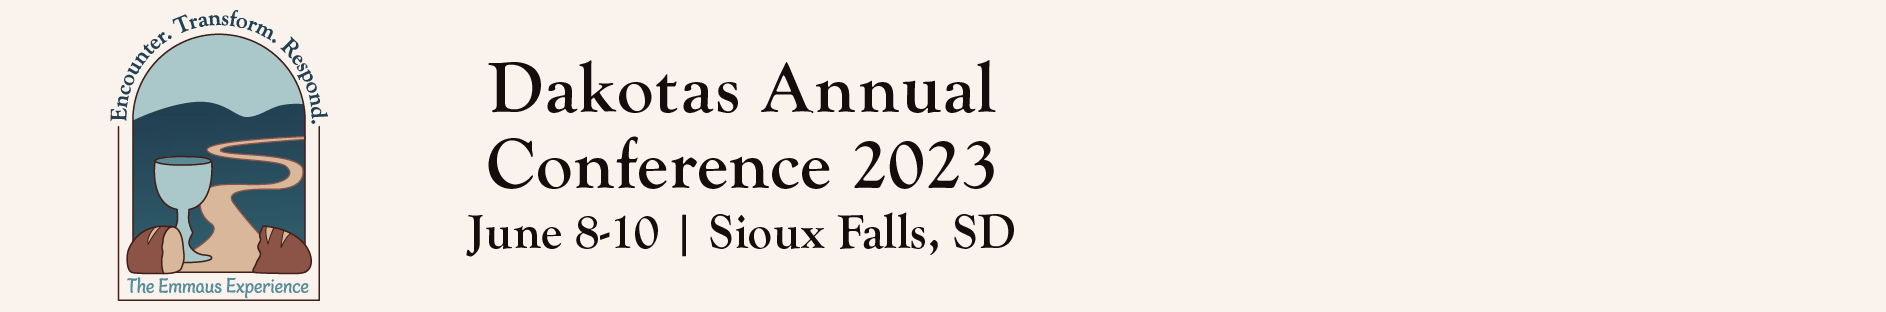 Dakotas Annual Conference 2023